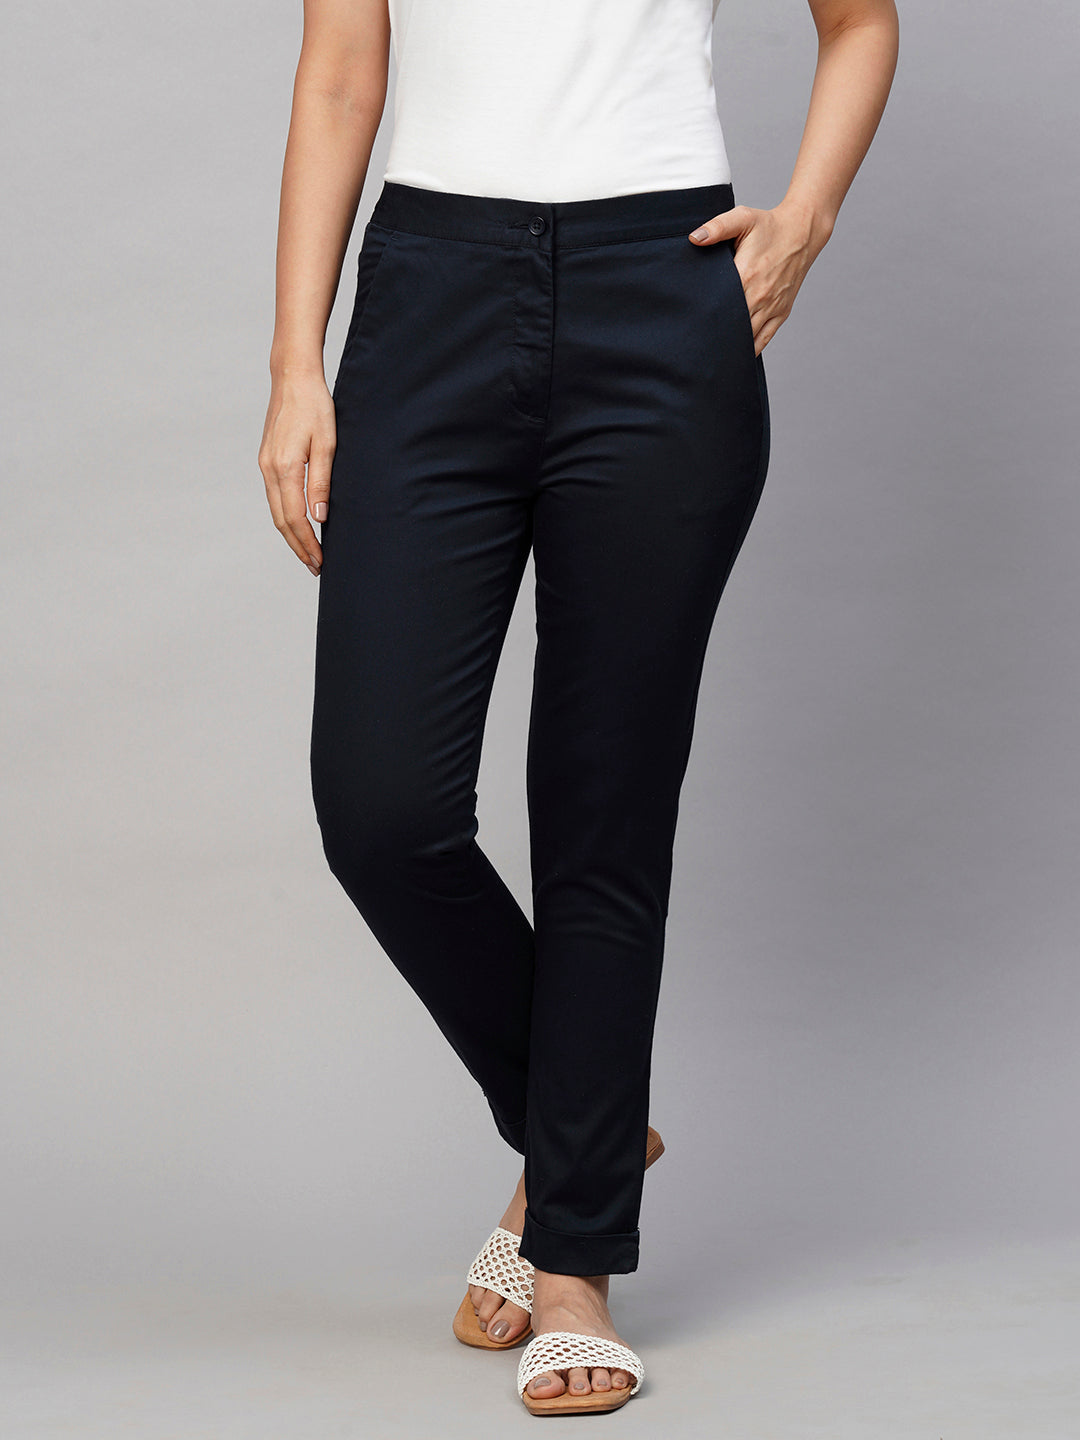 Women's Cotton Lycra Navy Slim Fit Pant